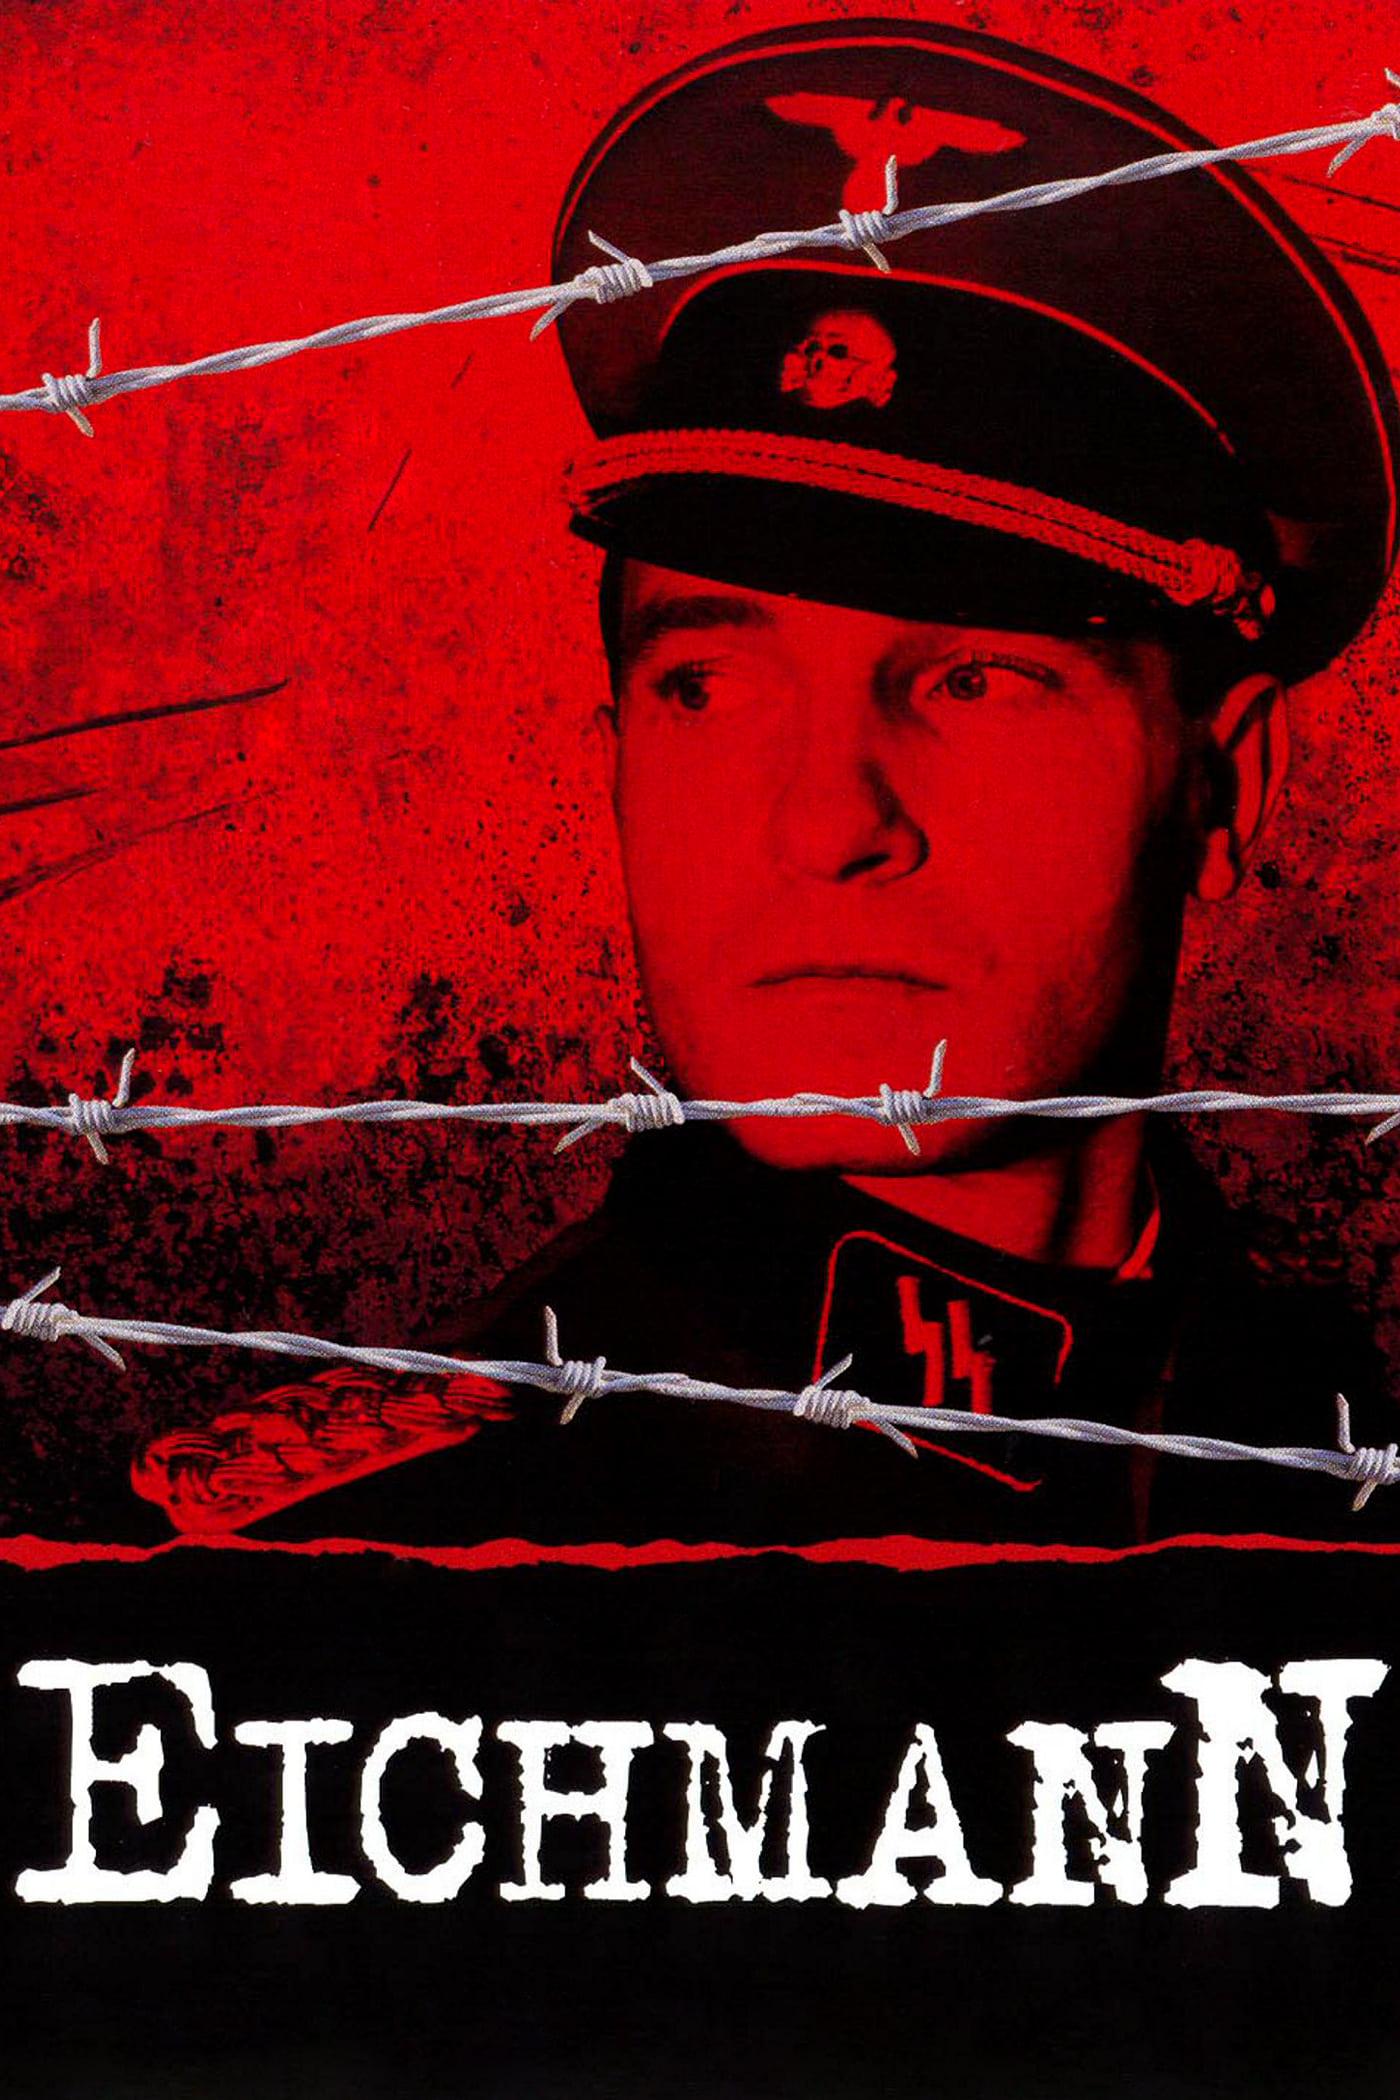 Eichmann poster